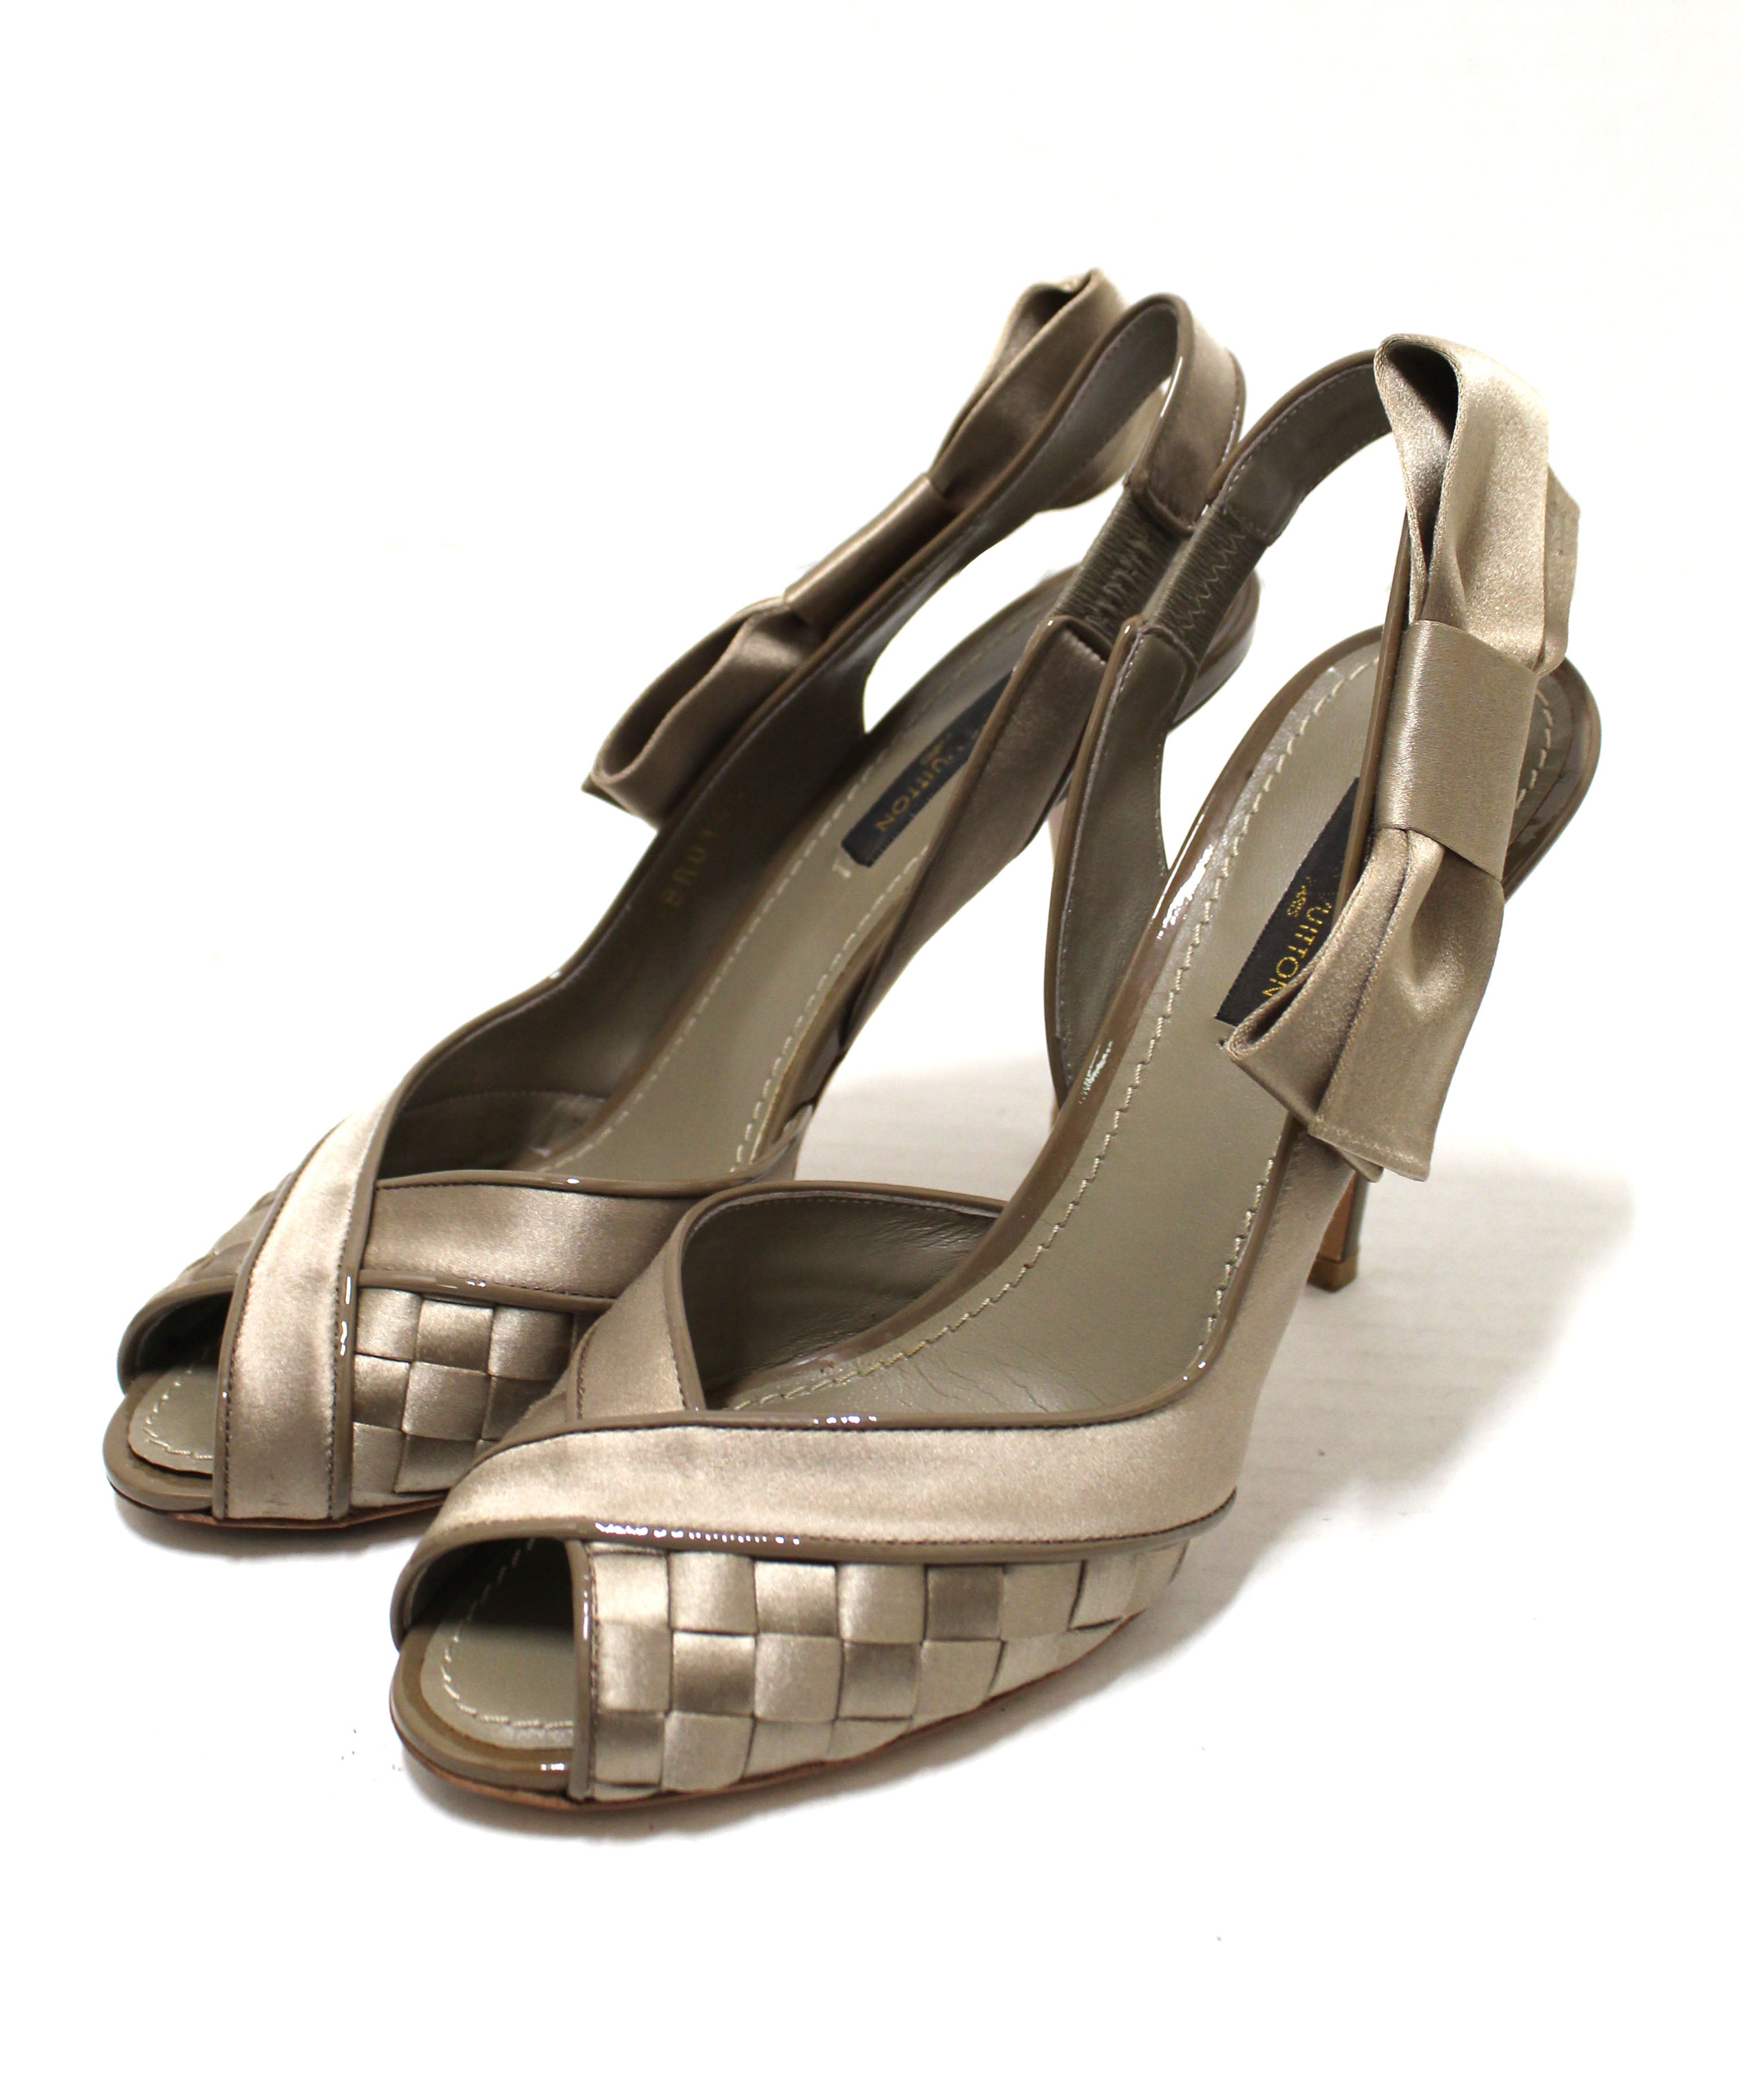 Authentic Louis Vuitton Taupe Satin Bow Woven Open Toe Pump Shoes Size 37.5